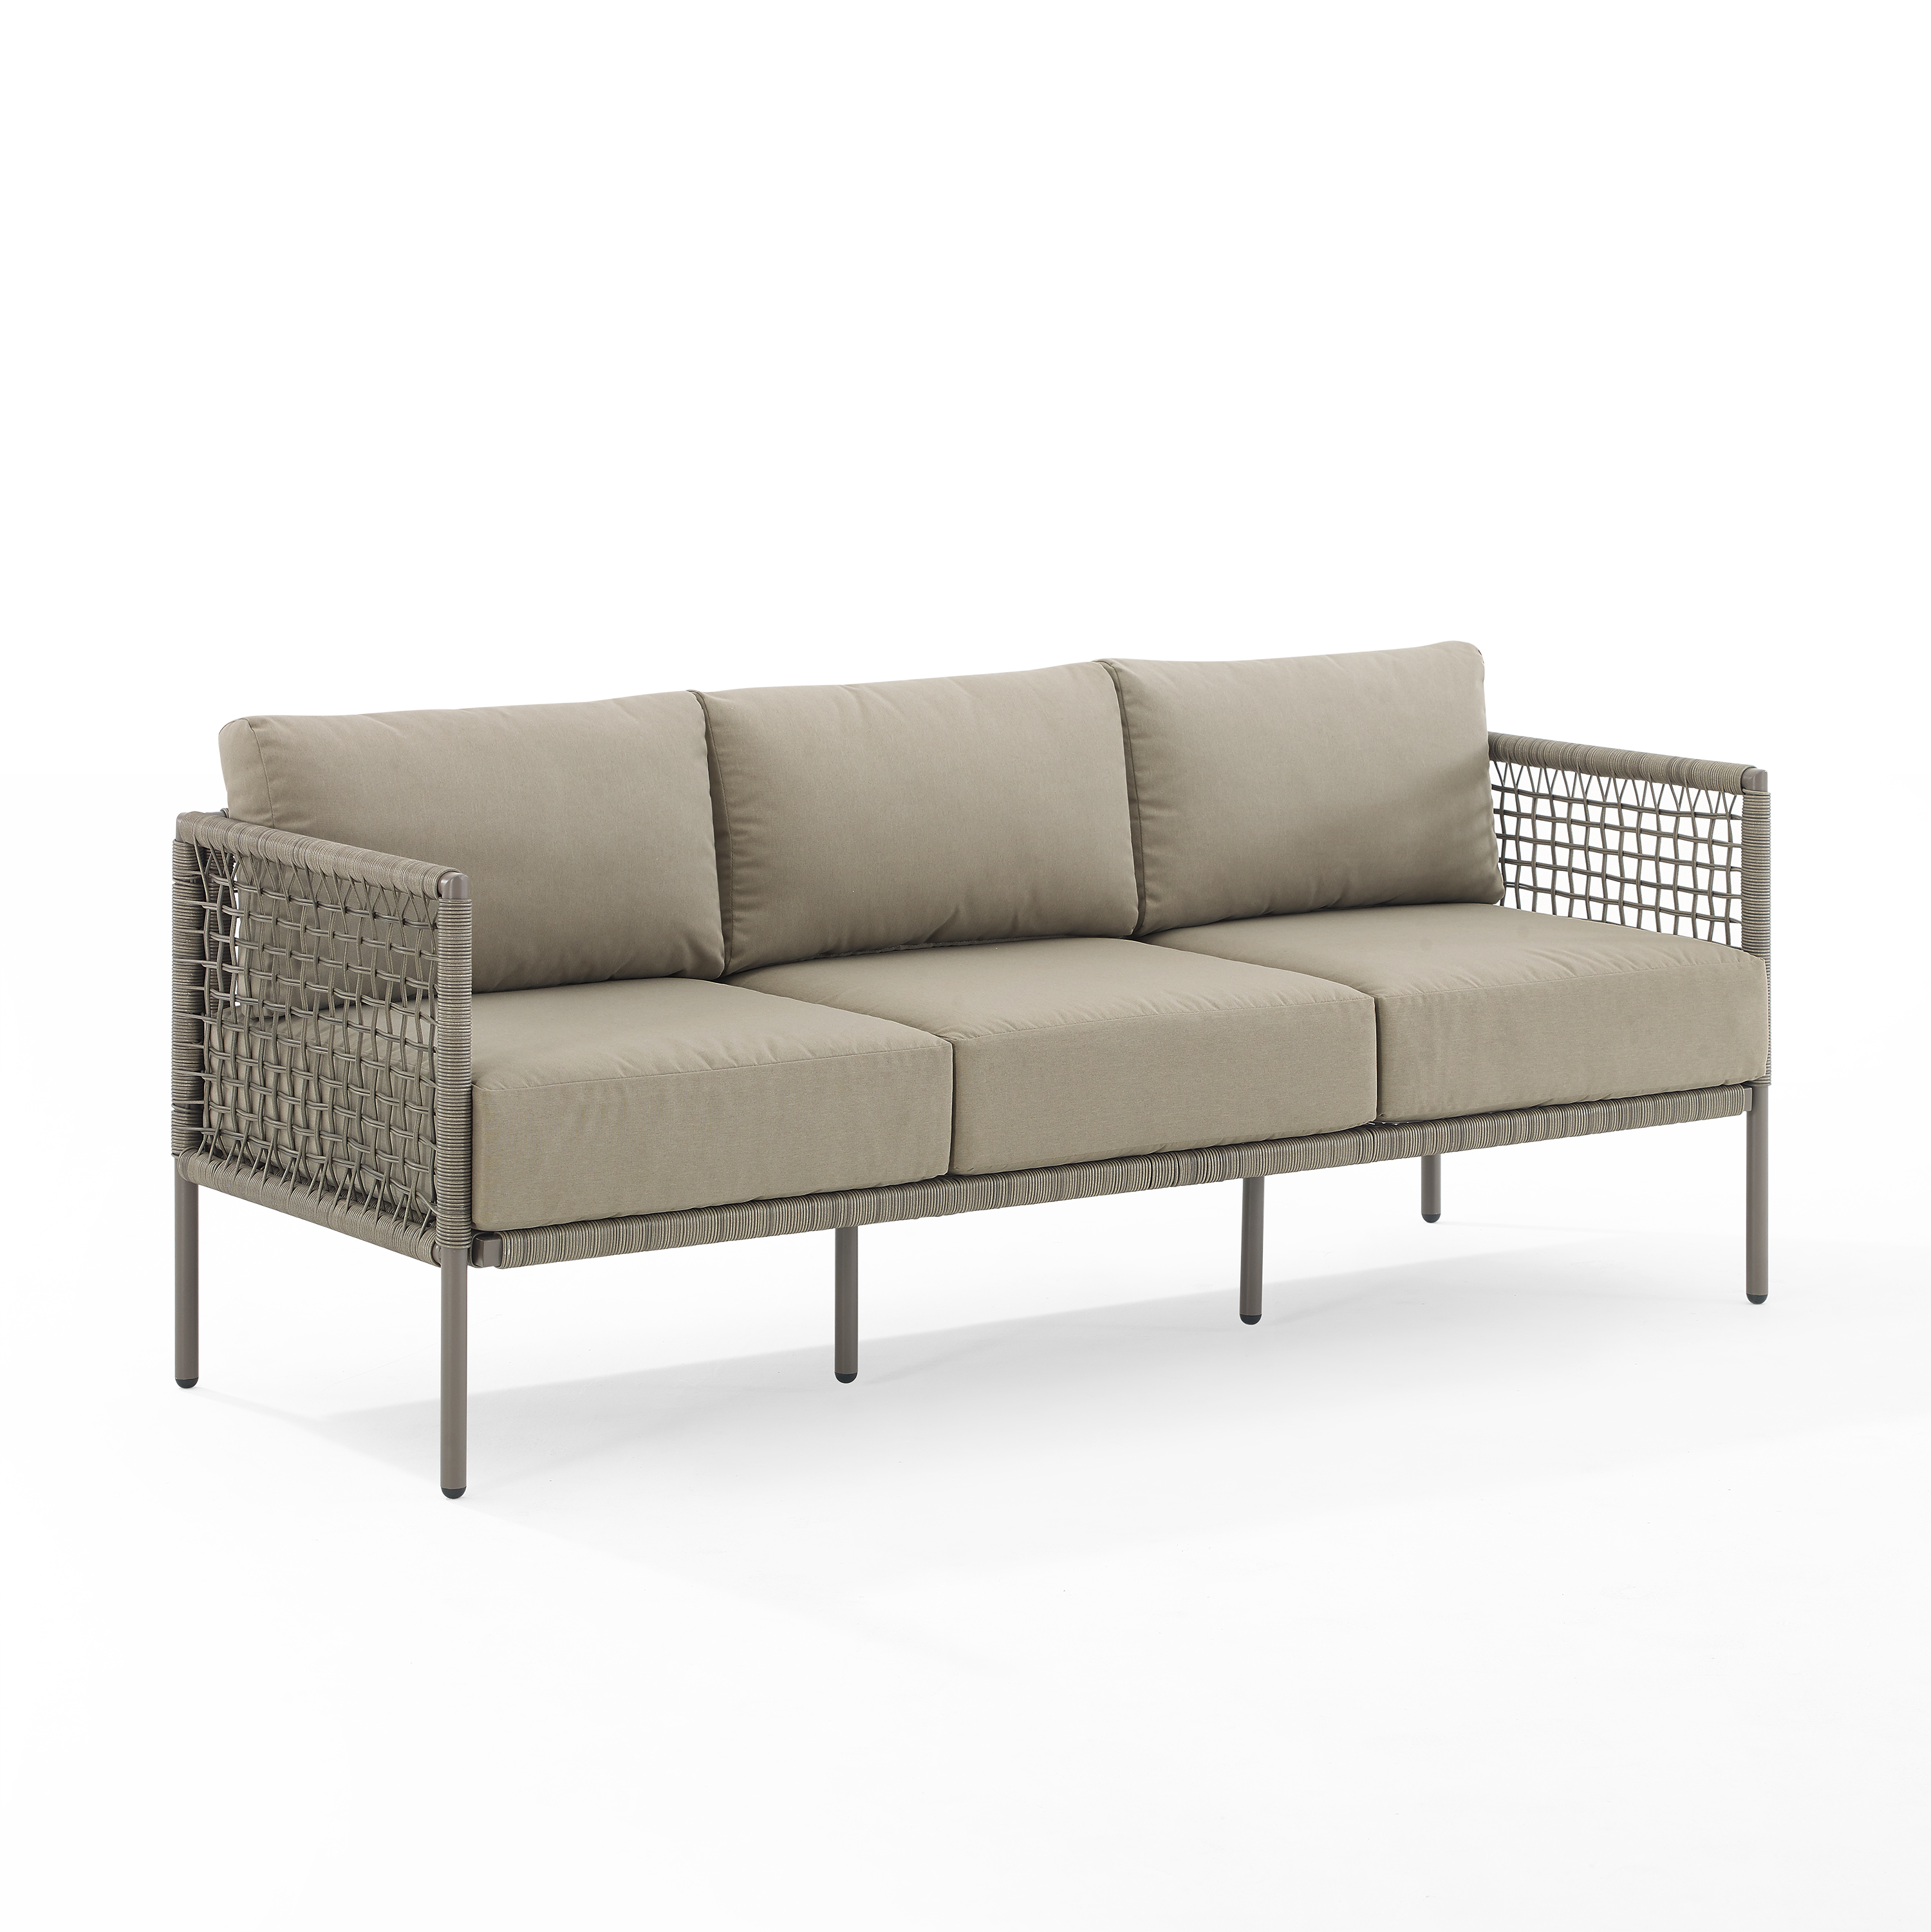 Crosley Furniture Cali Bay Modern Wicker Outdoor Sofa in Light Brown - image 2 of 11